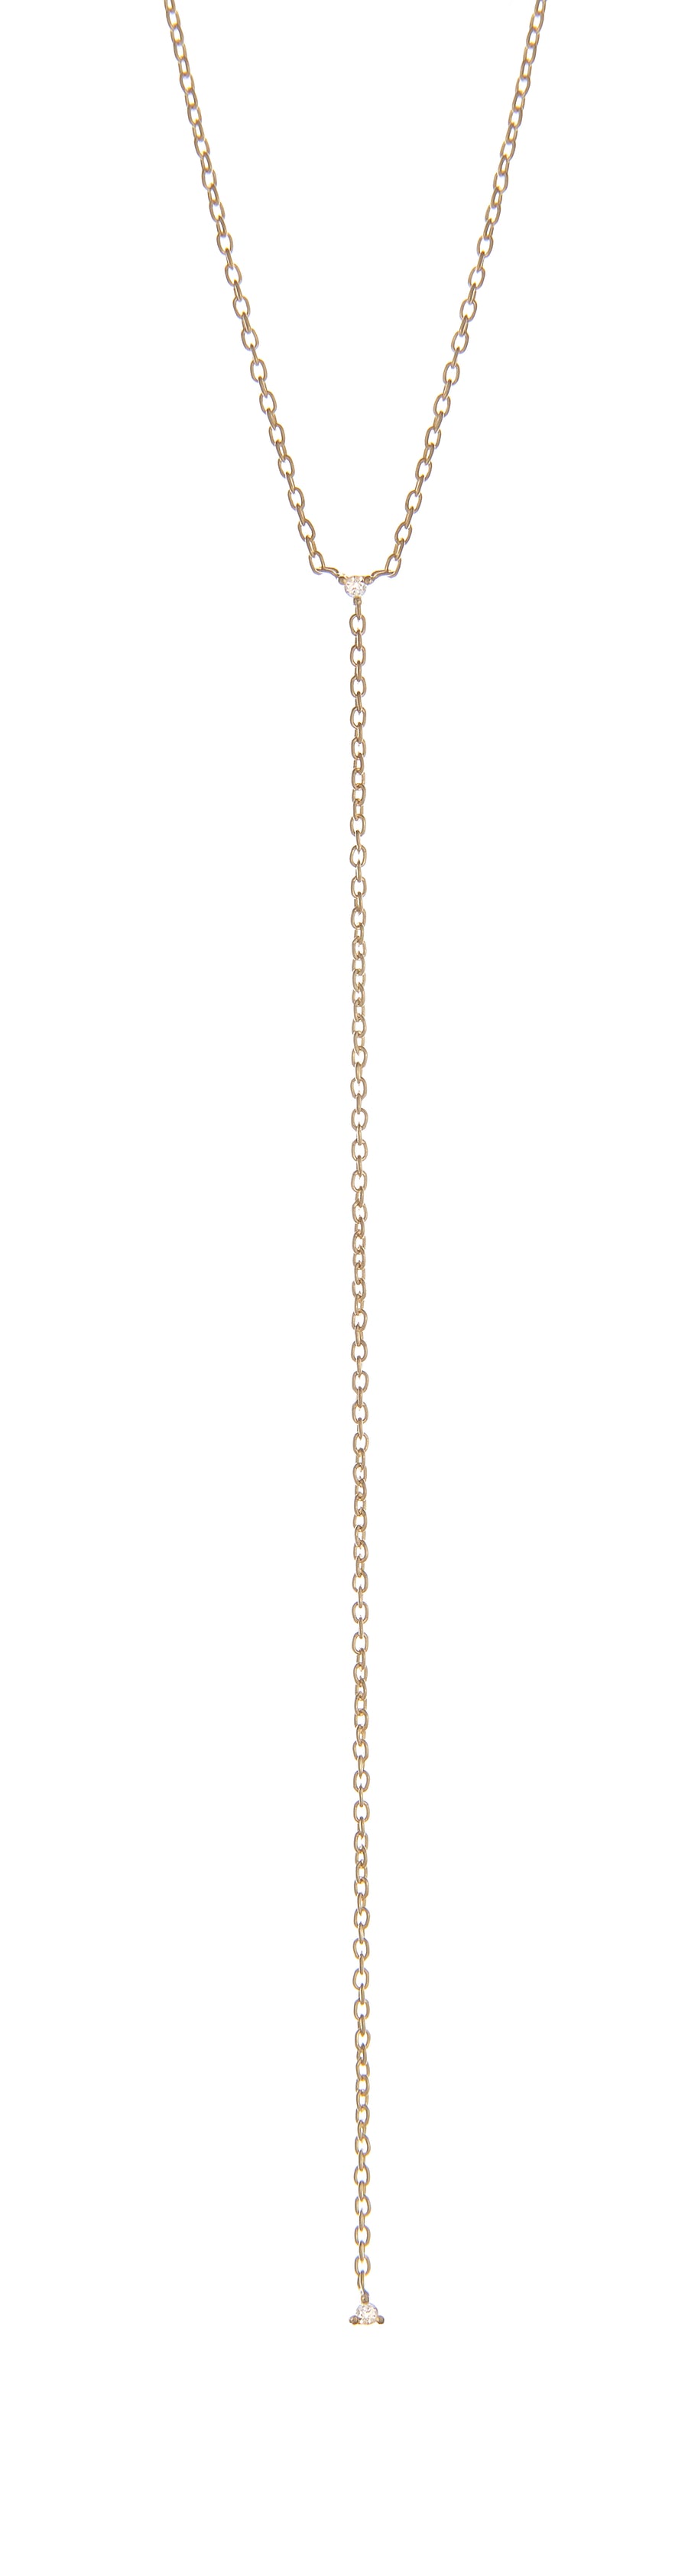 Vela - Lariat necklace